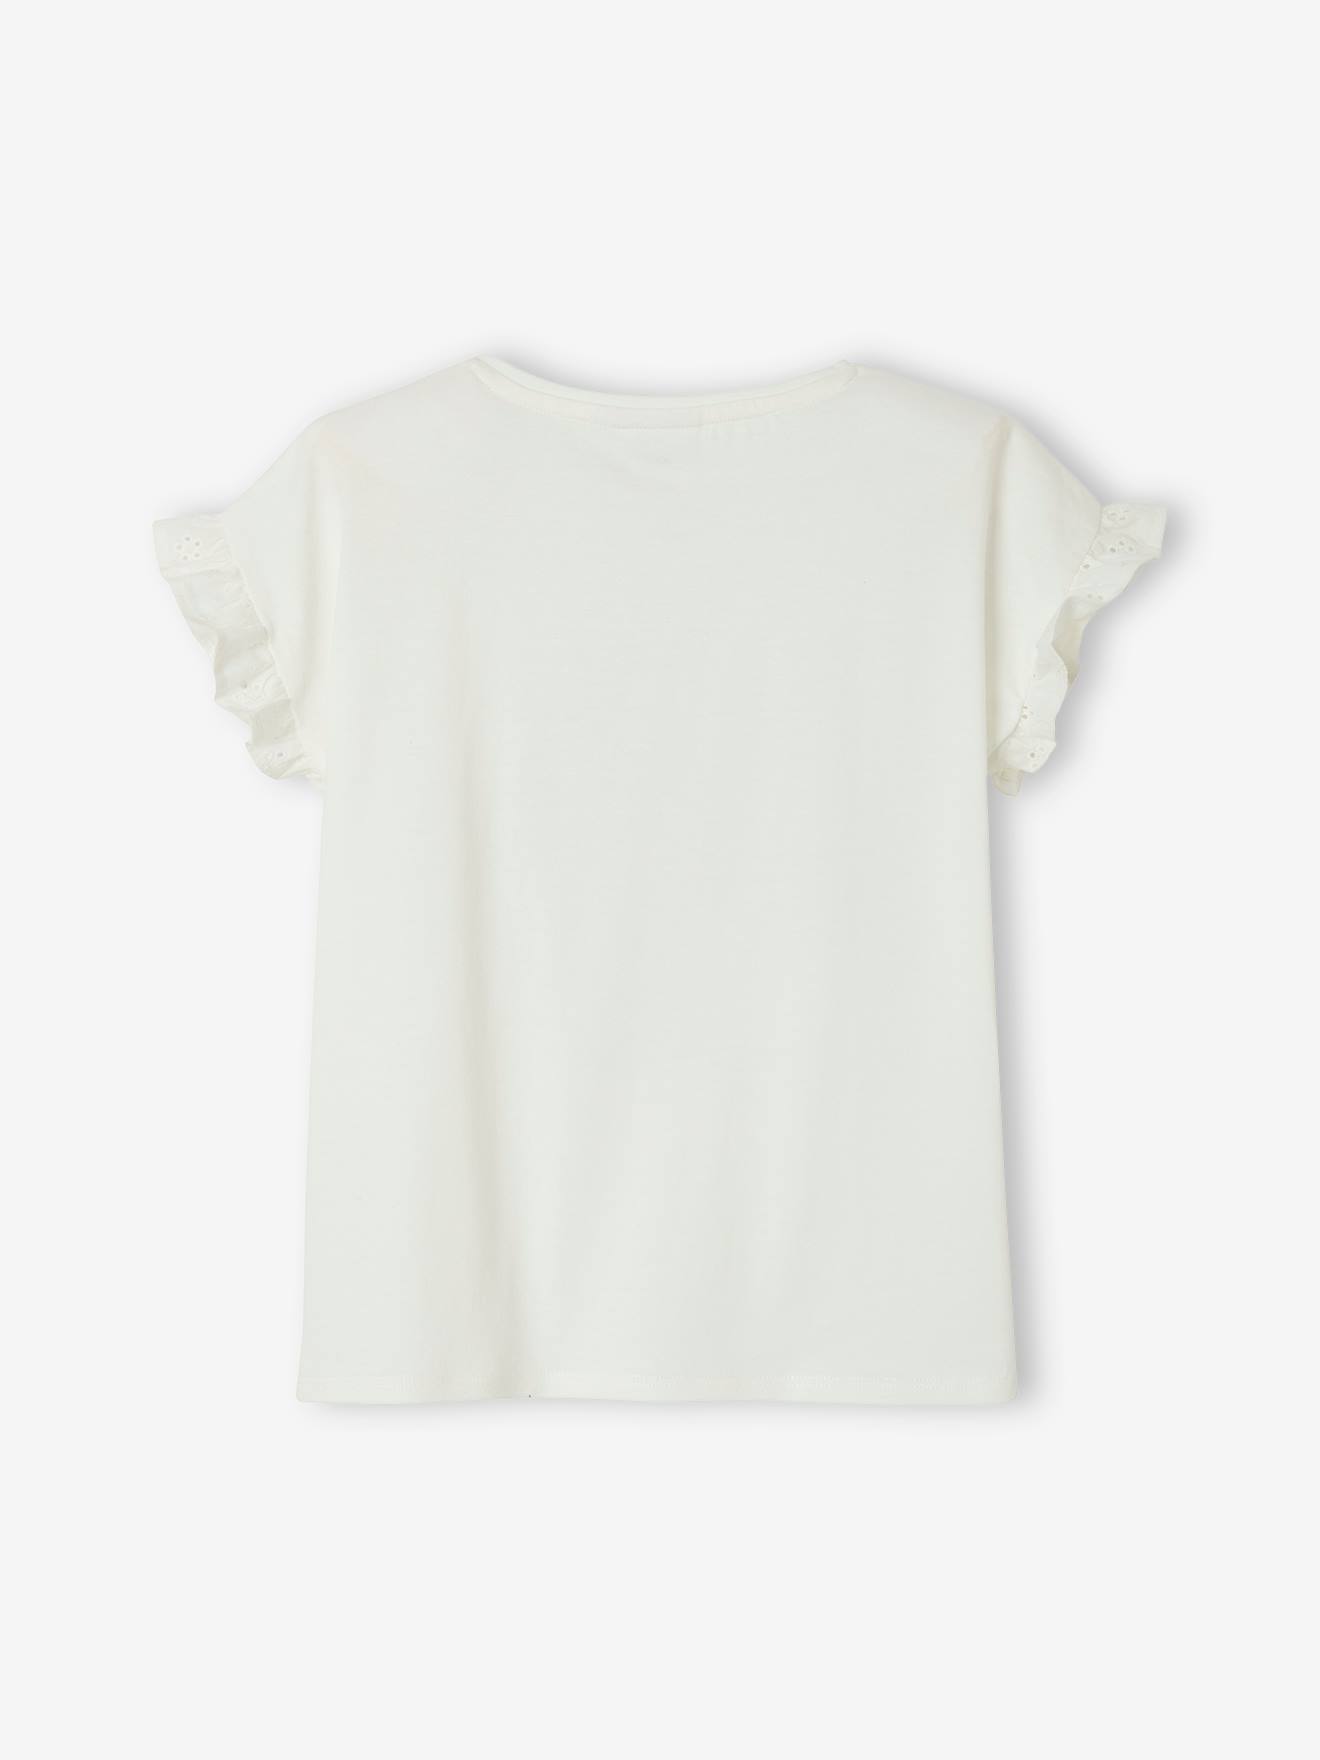 T-shirt 'Les Aristochats' en jersey - gris - Kiabi - 9.00€